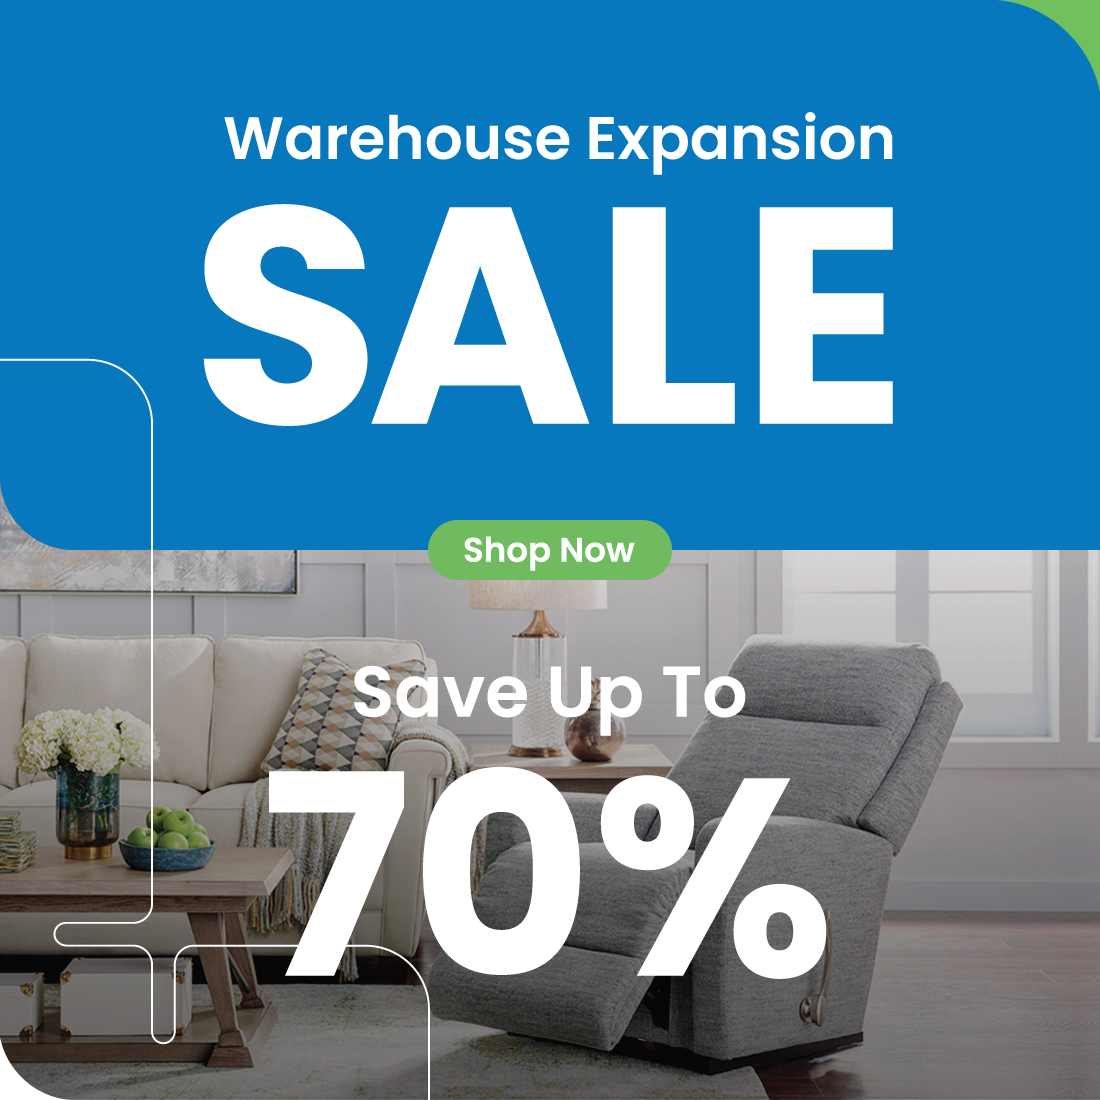 Warehouse expansion sale, social media advertisement design